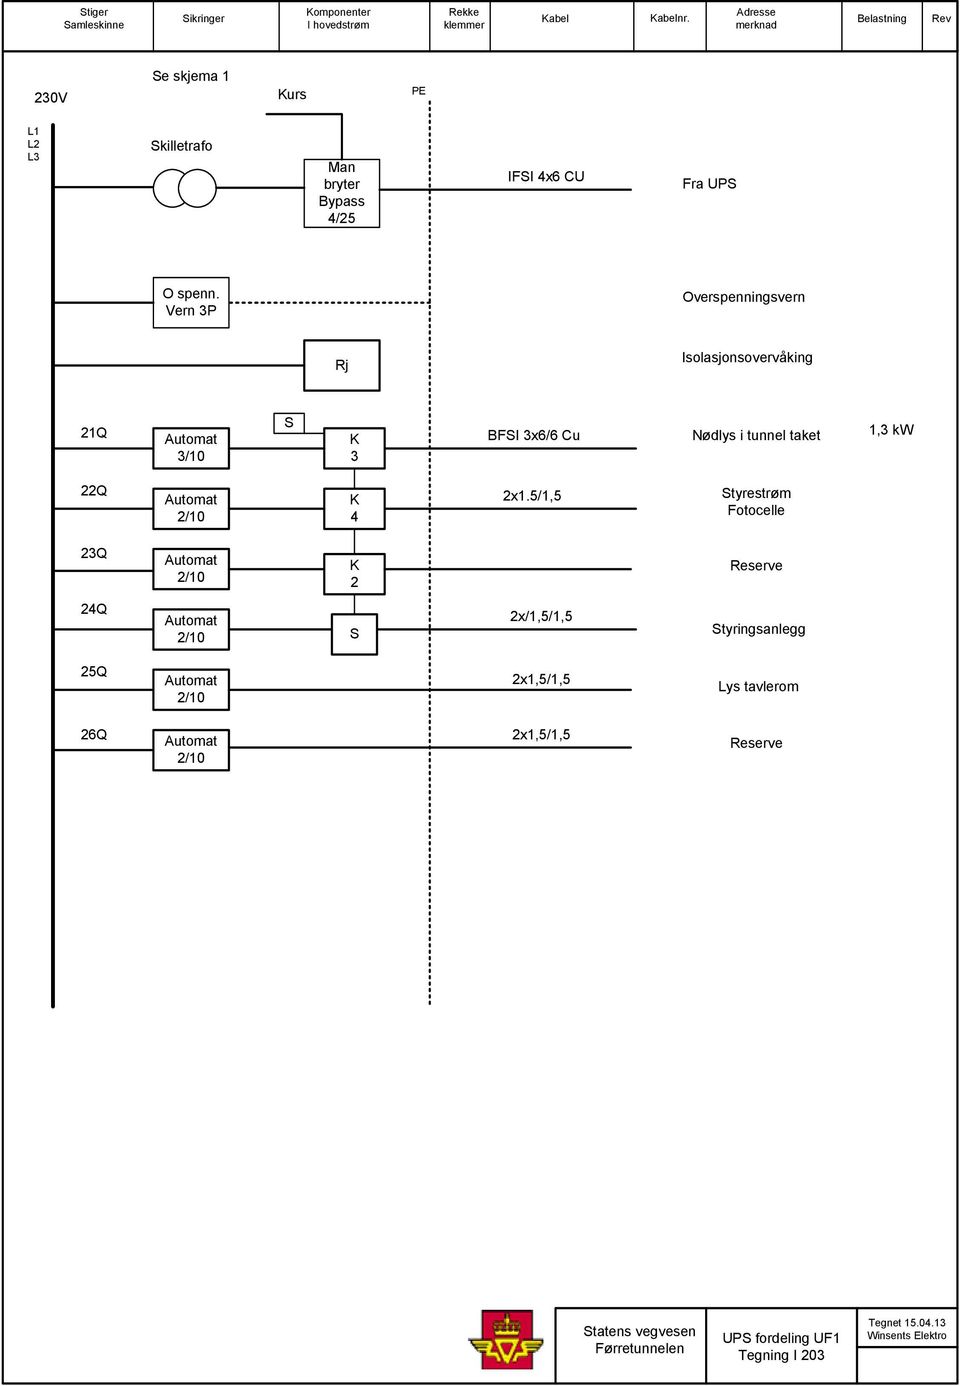 Vern 3P Overspenningsvern Rj Isolasjonsovervåking 21Q 3/10 3 BFI 3x6/6 Cu Nødlys i tunnel taket 1,3 kw 22Q 2/10 2x1.